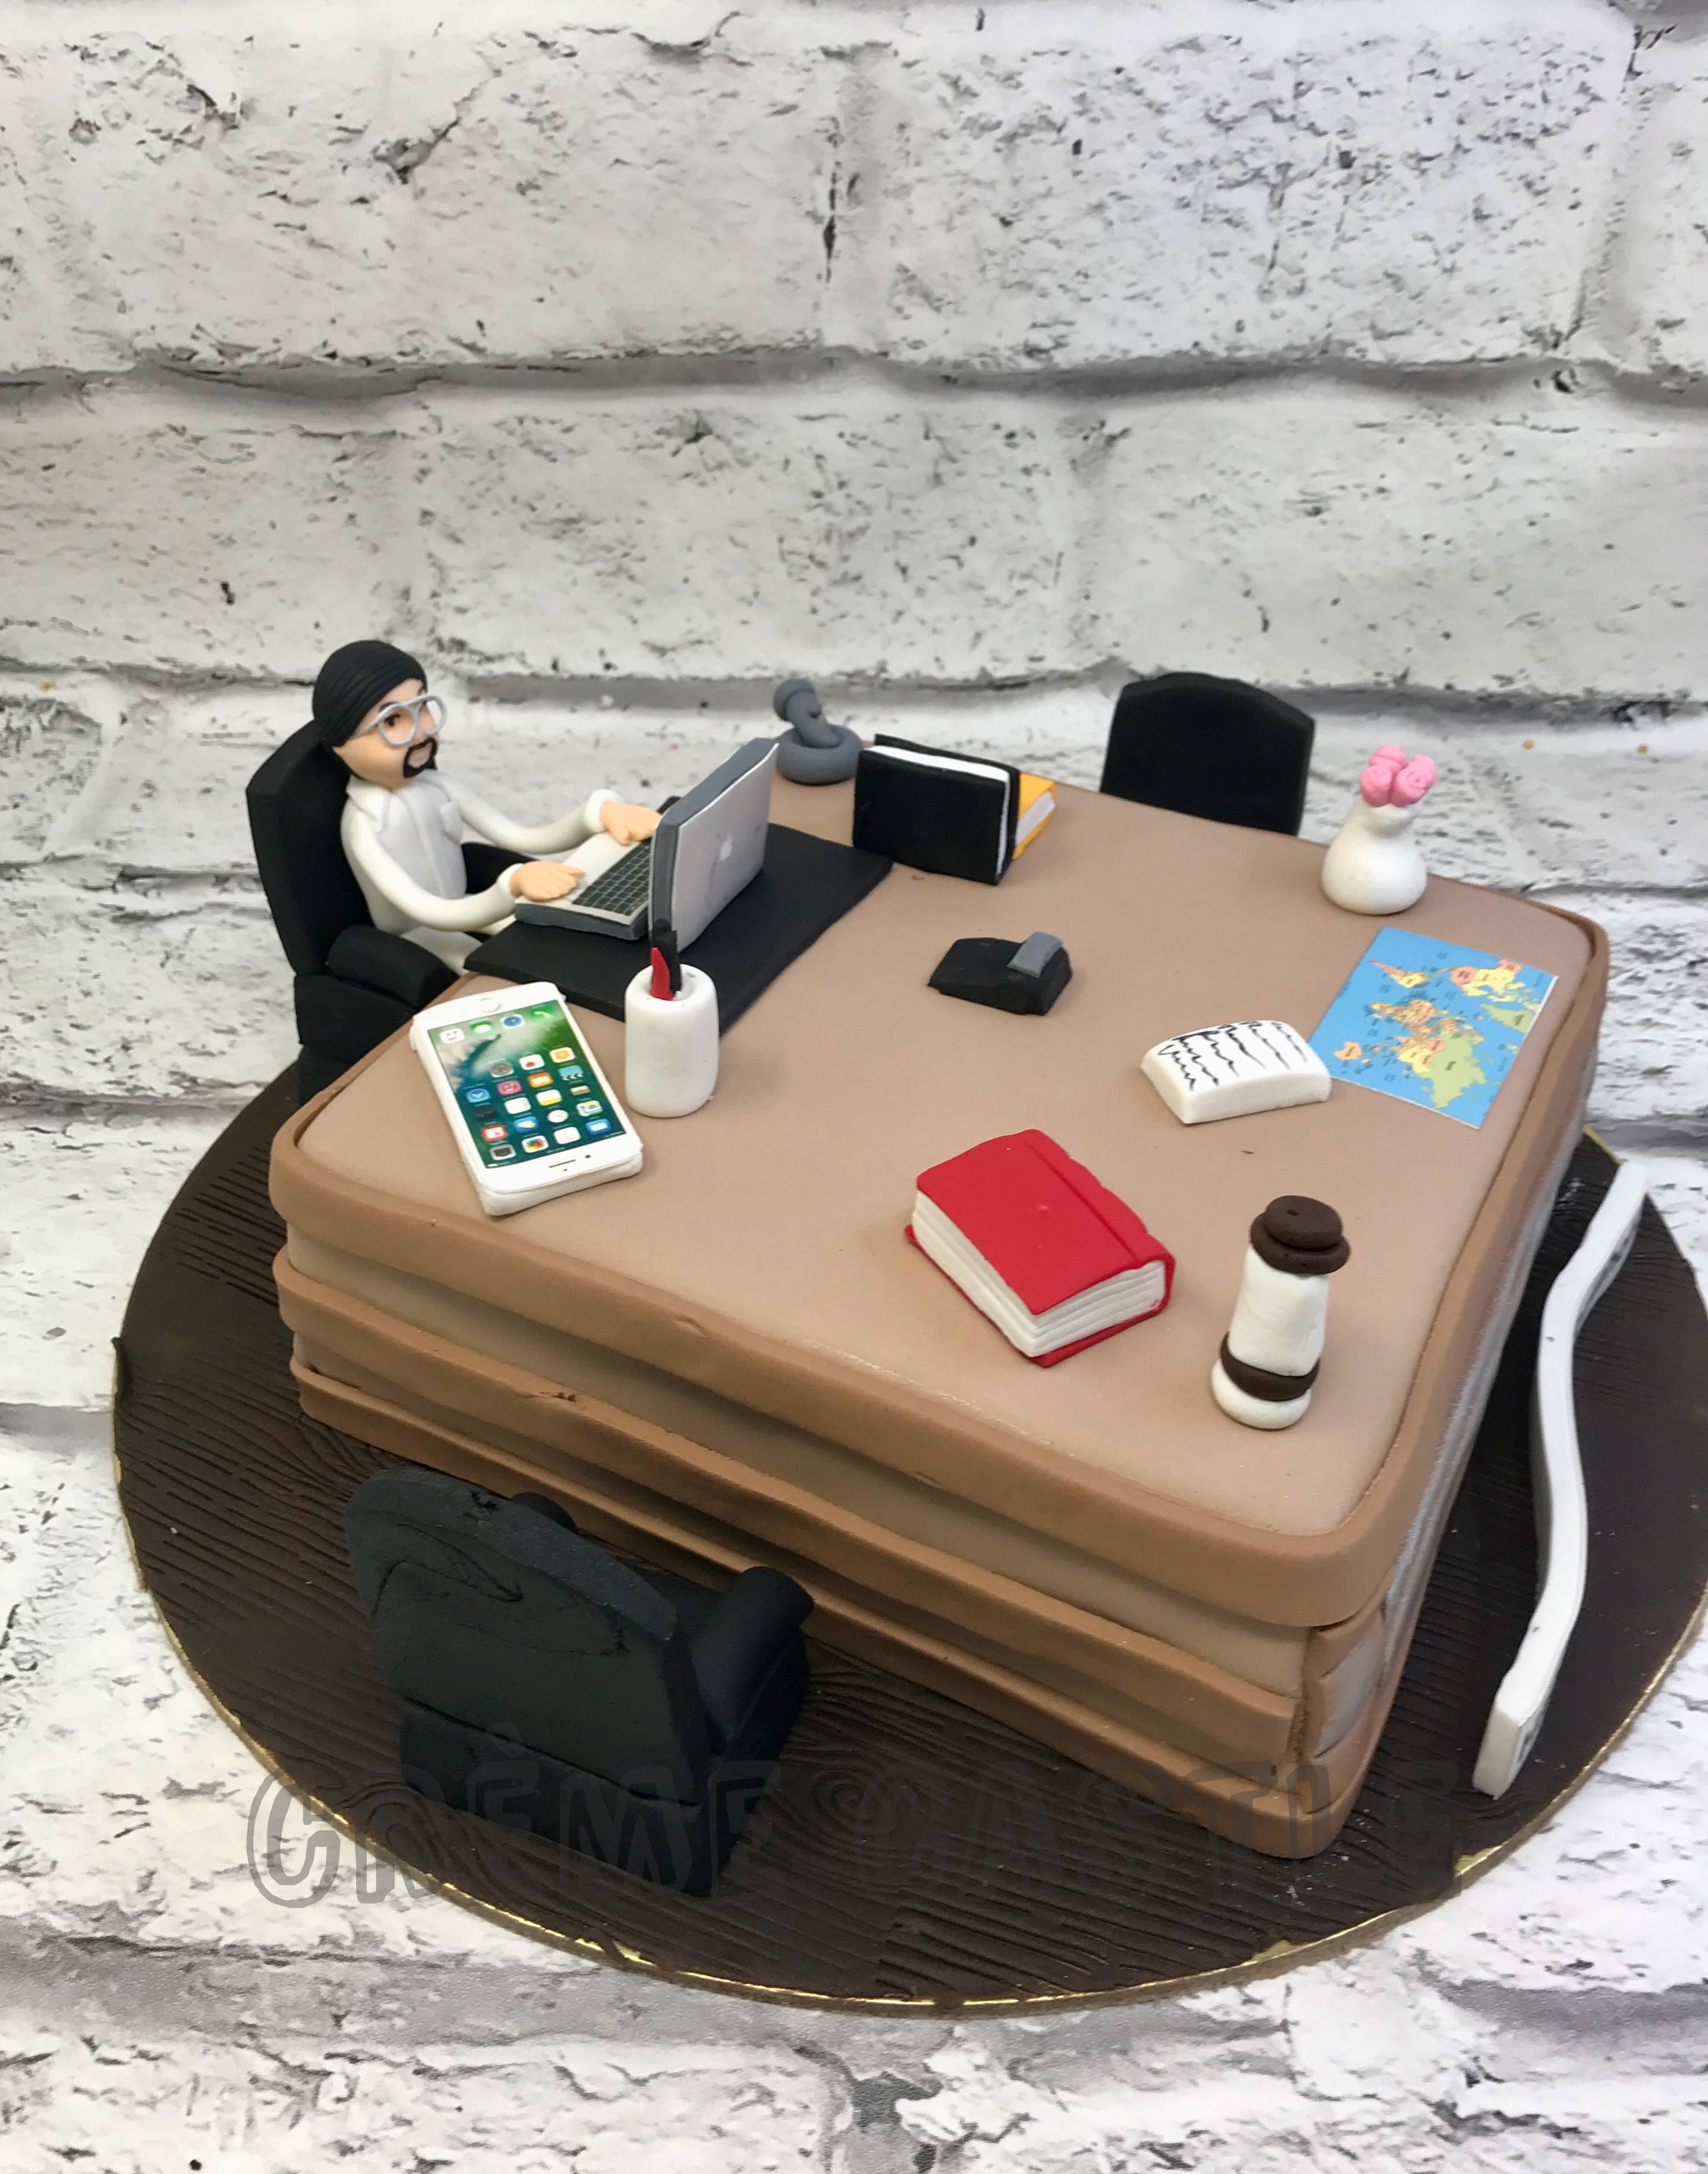 The Office birthday cake | Bad cakes, Birthday food, Creative baking